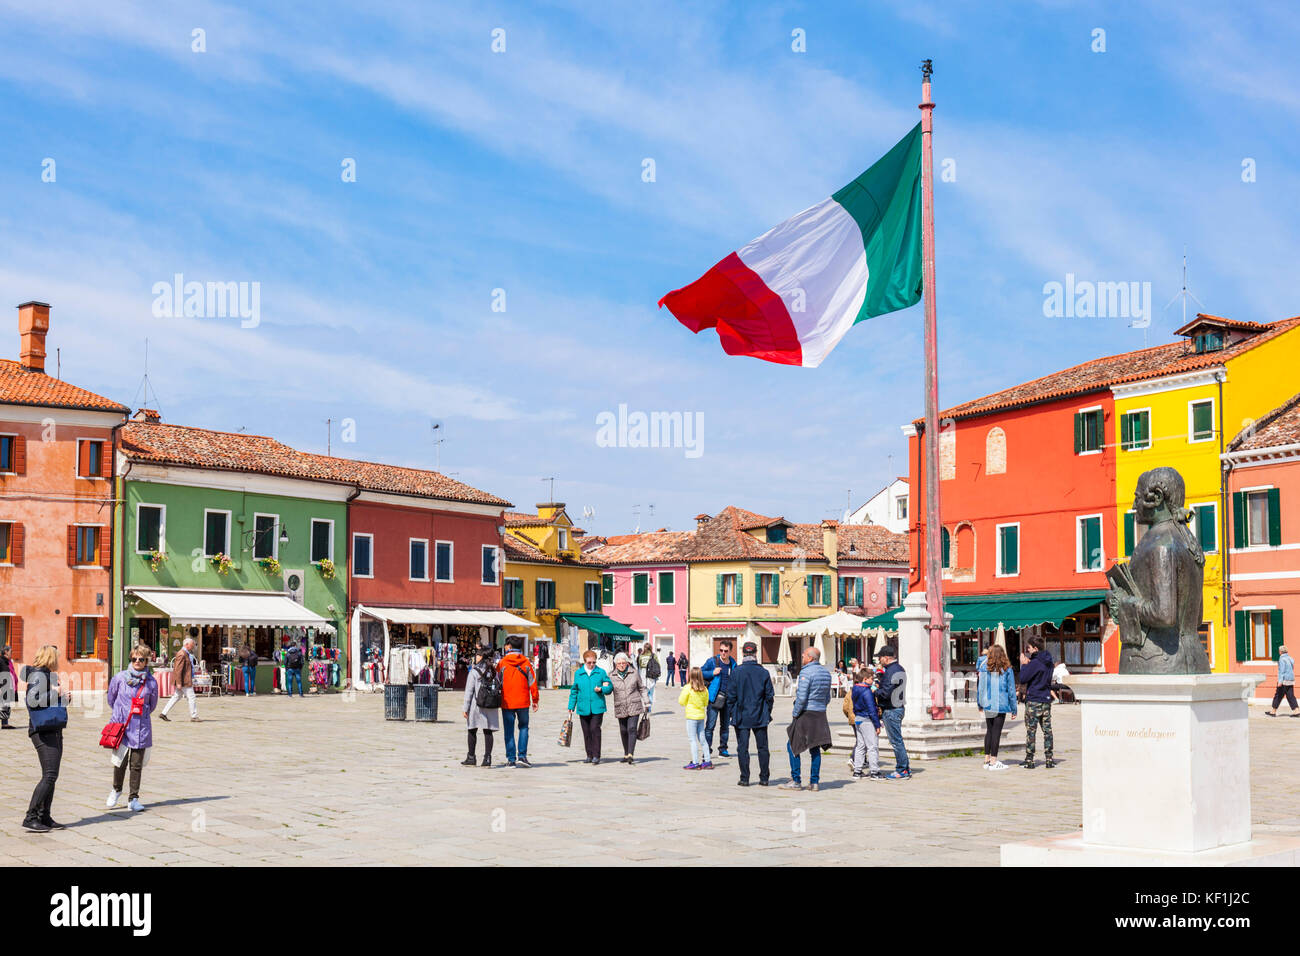 VENICE ITALY VENICE Italian flag flying in the Piazza Baldassare Galuppi Burano main square island of Burano island Venice lagoon Venice Italy Europe Stock Photo